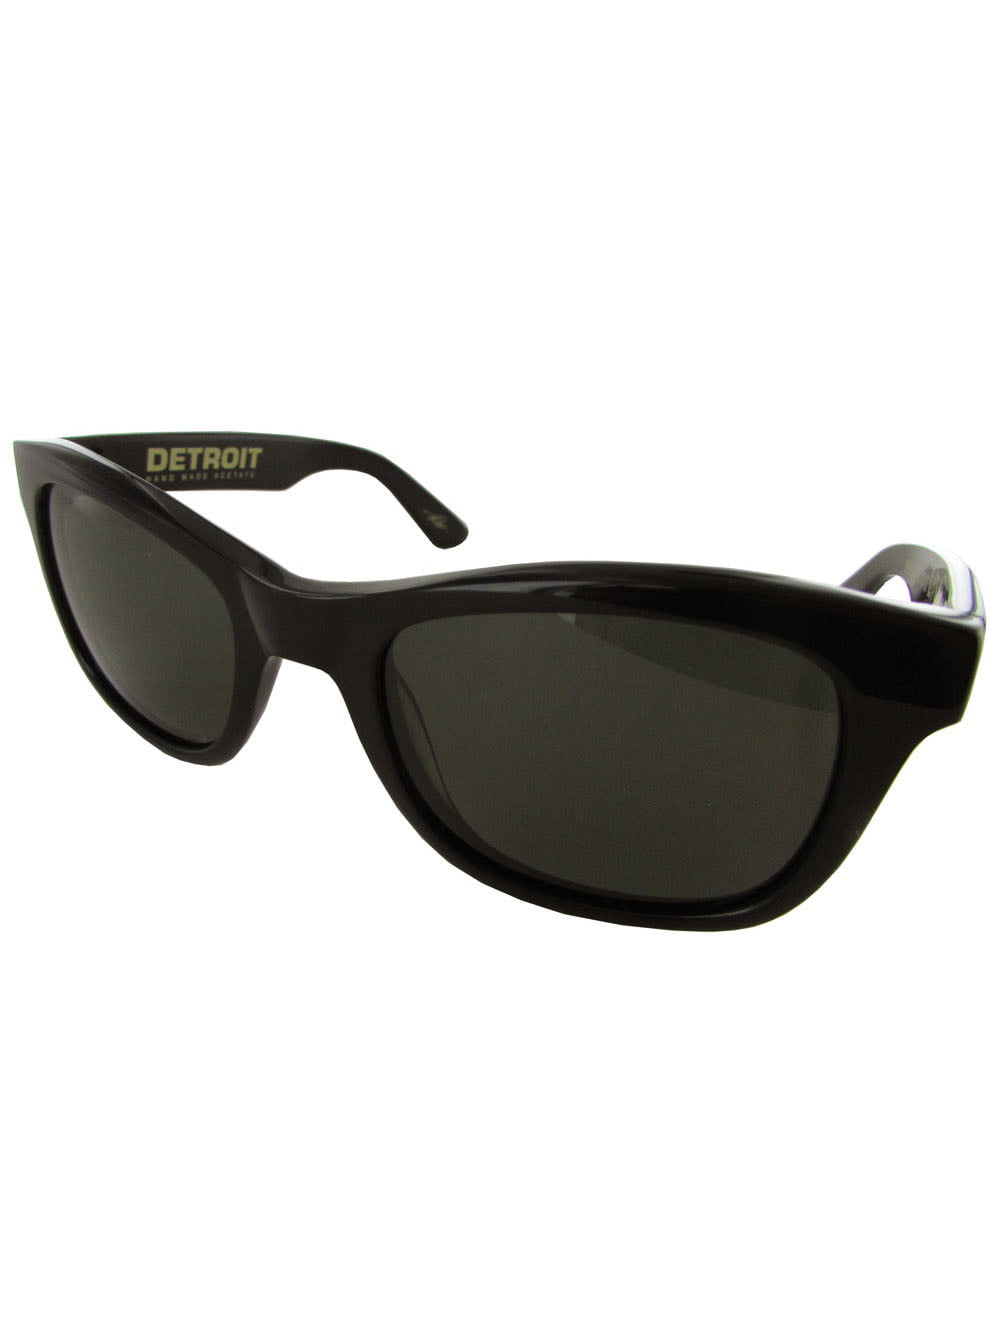 REVO Gunner Sunglasses POLARIZED Shiny Black/Water Blue NEW RE5010X-00 NO CASE 